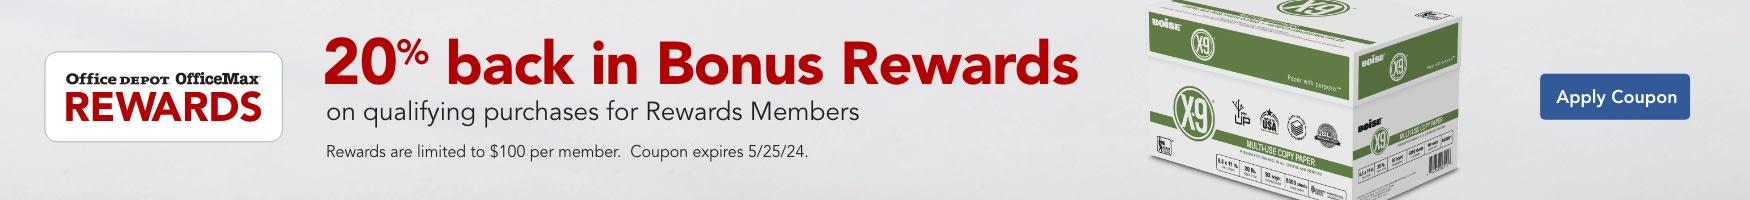 20% Back in Bonus Rewards on qualifying purchases